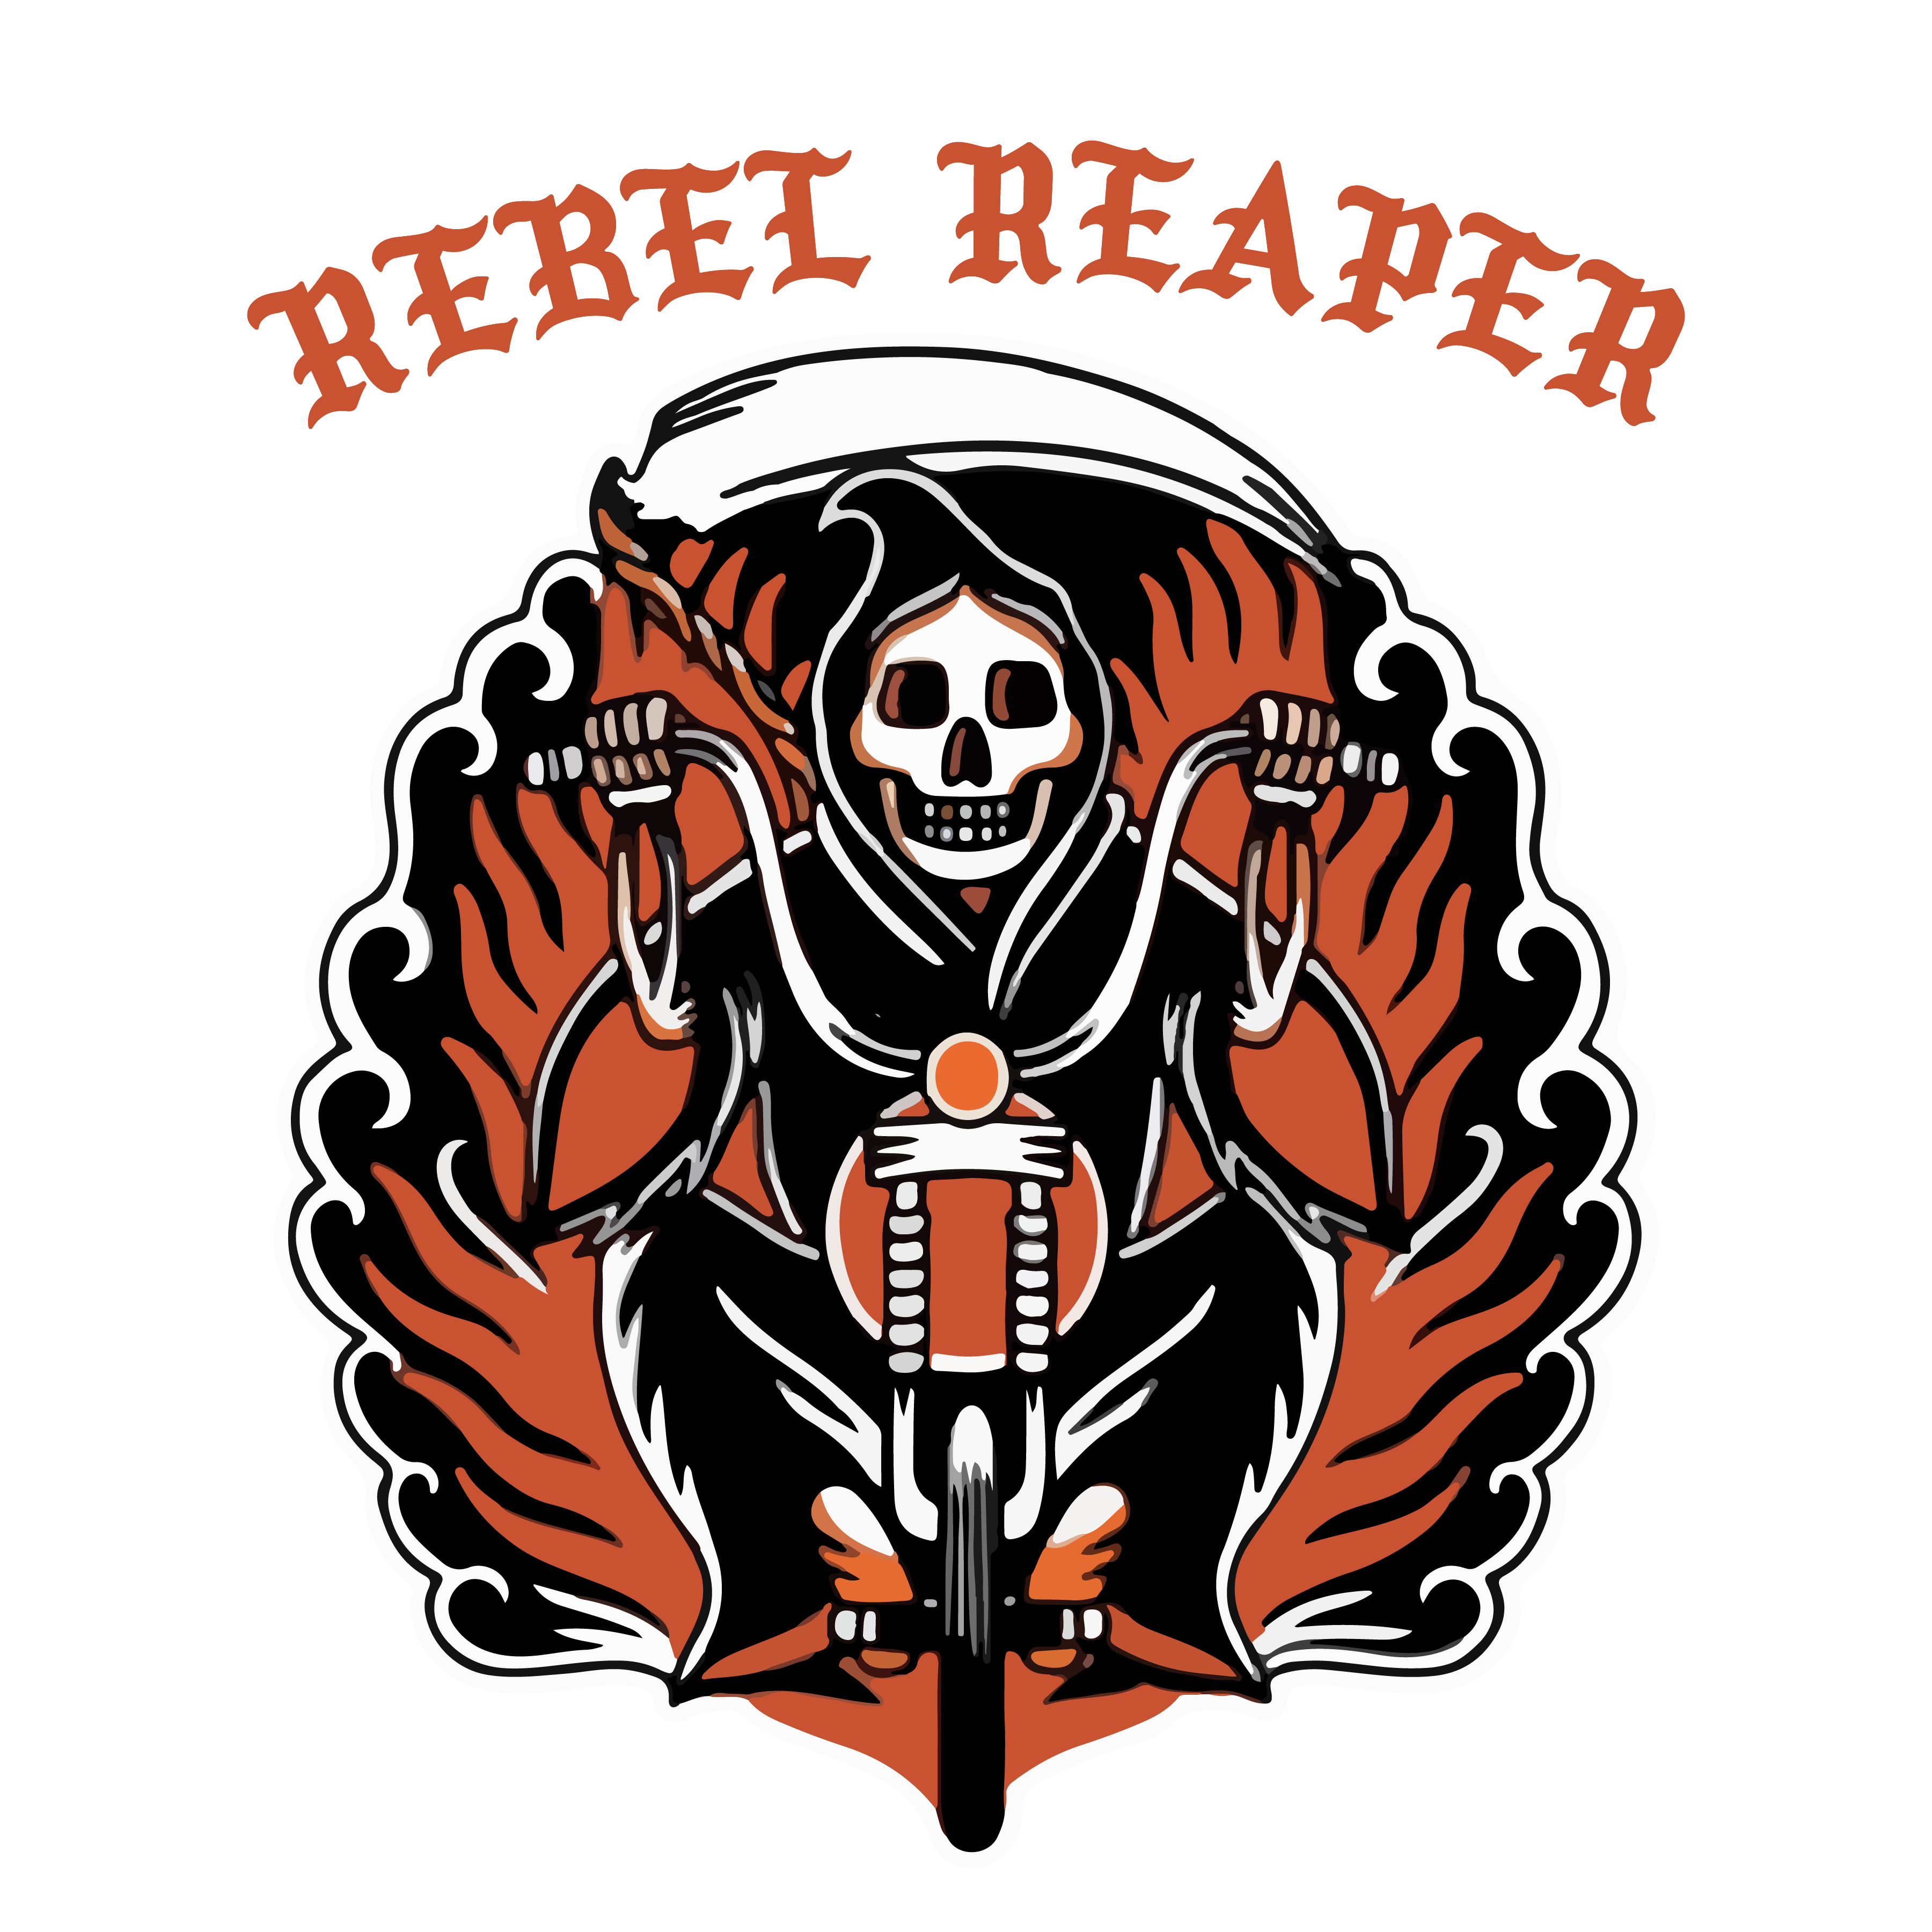 rebel reaper tattoo